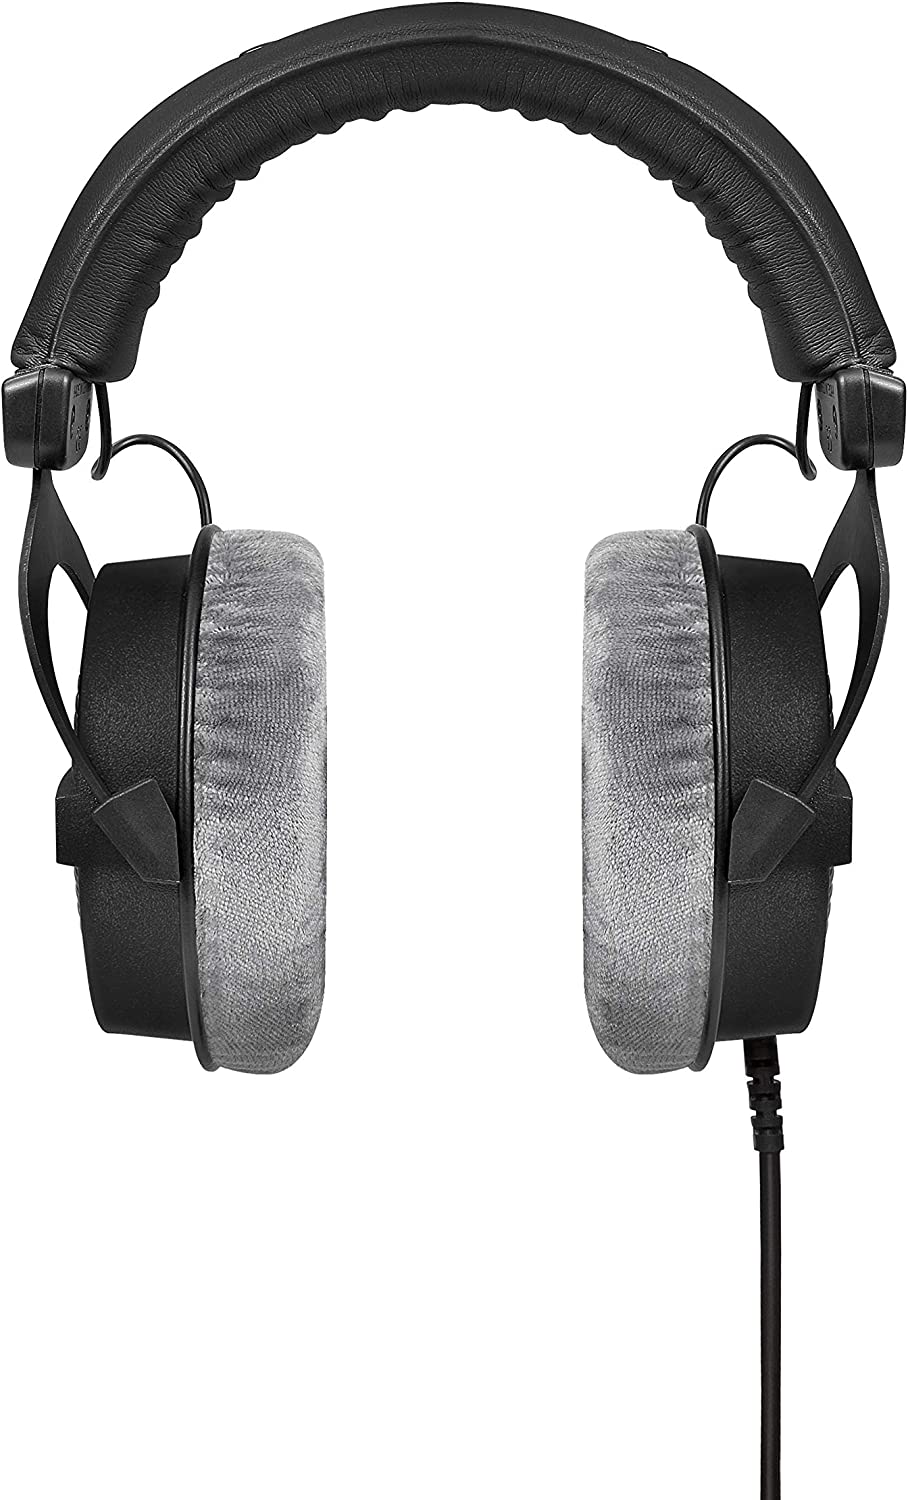 Beyerdynamic DT 990 Pro 250 Ohm Headphones with Splitter and 3-Year Warranty Base Bundle